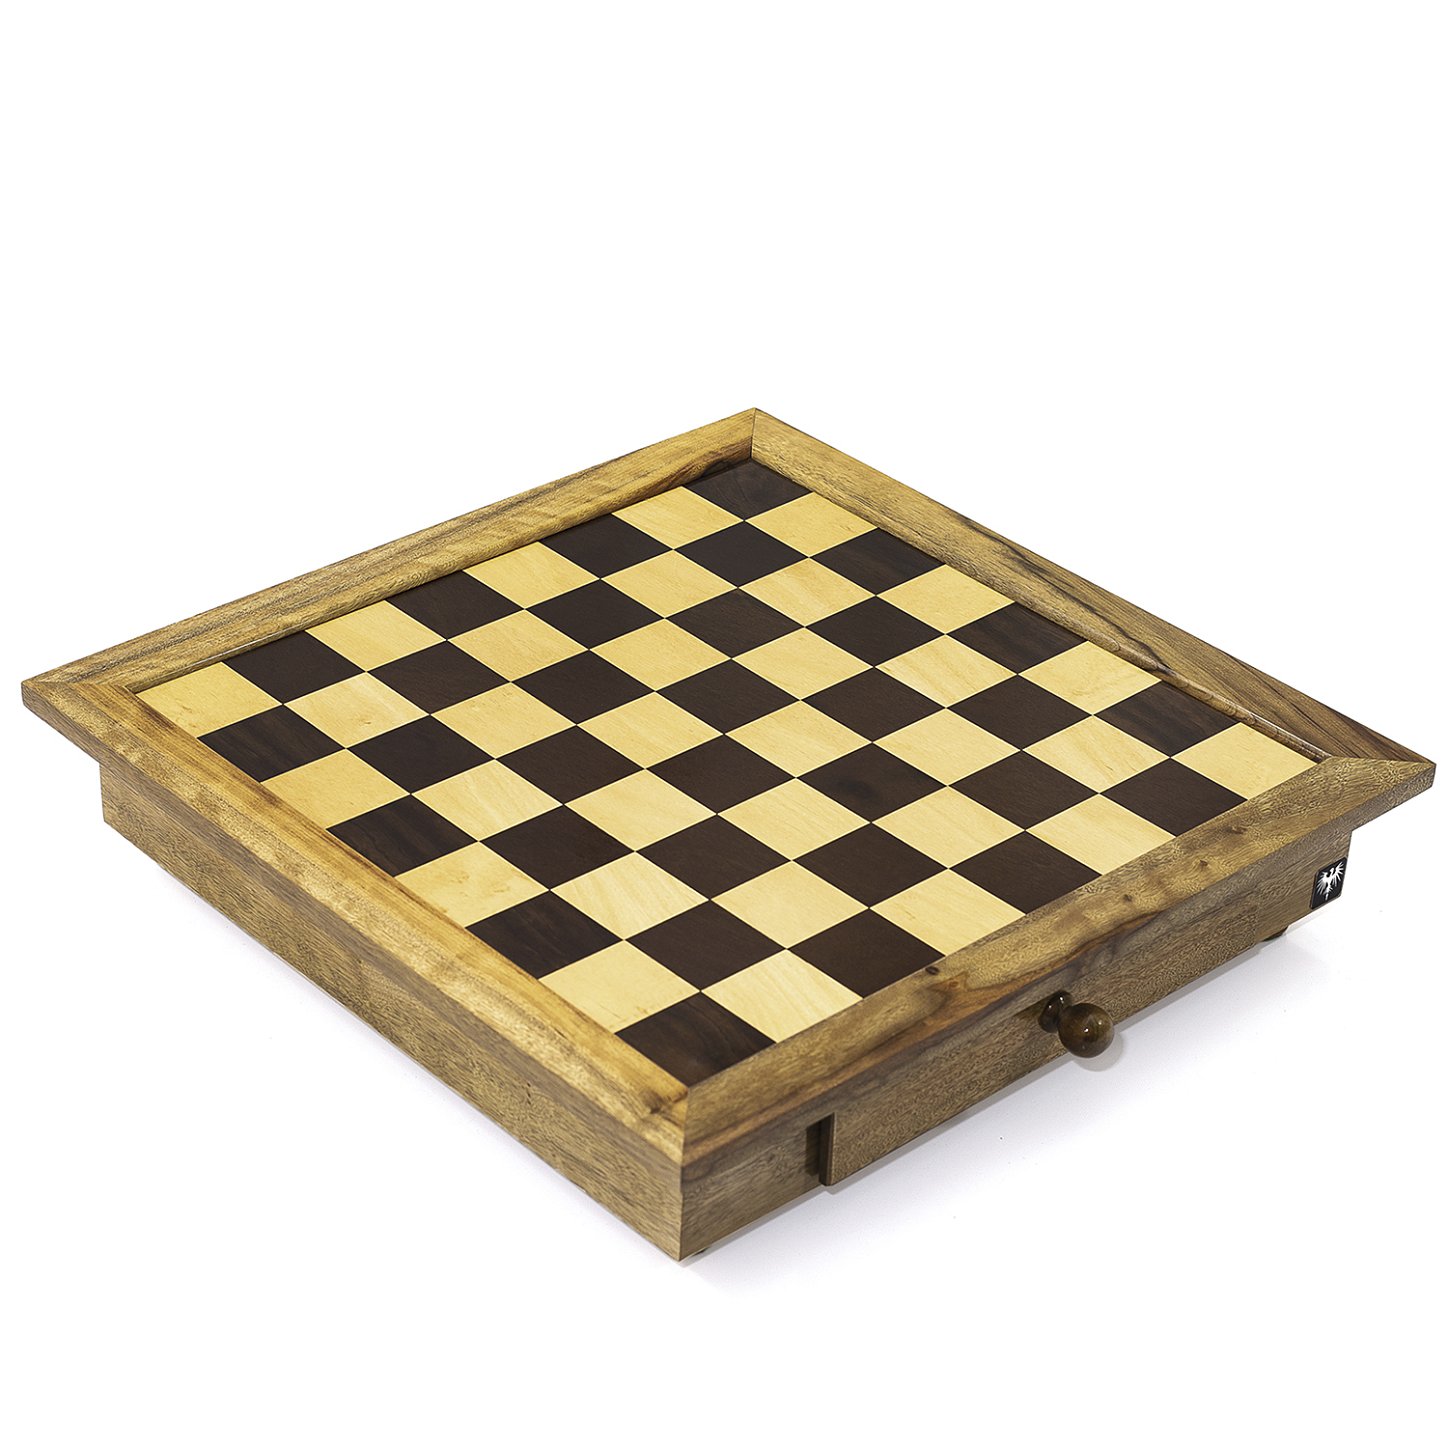 tabuleiro-de-xadrez-gavetas-madeira-marchetado-casas-5x5cm-imagem-1.jpg